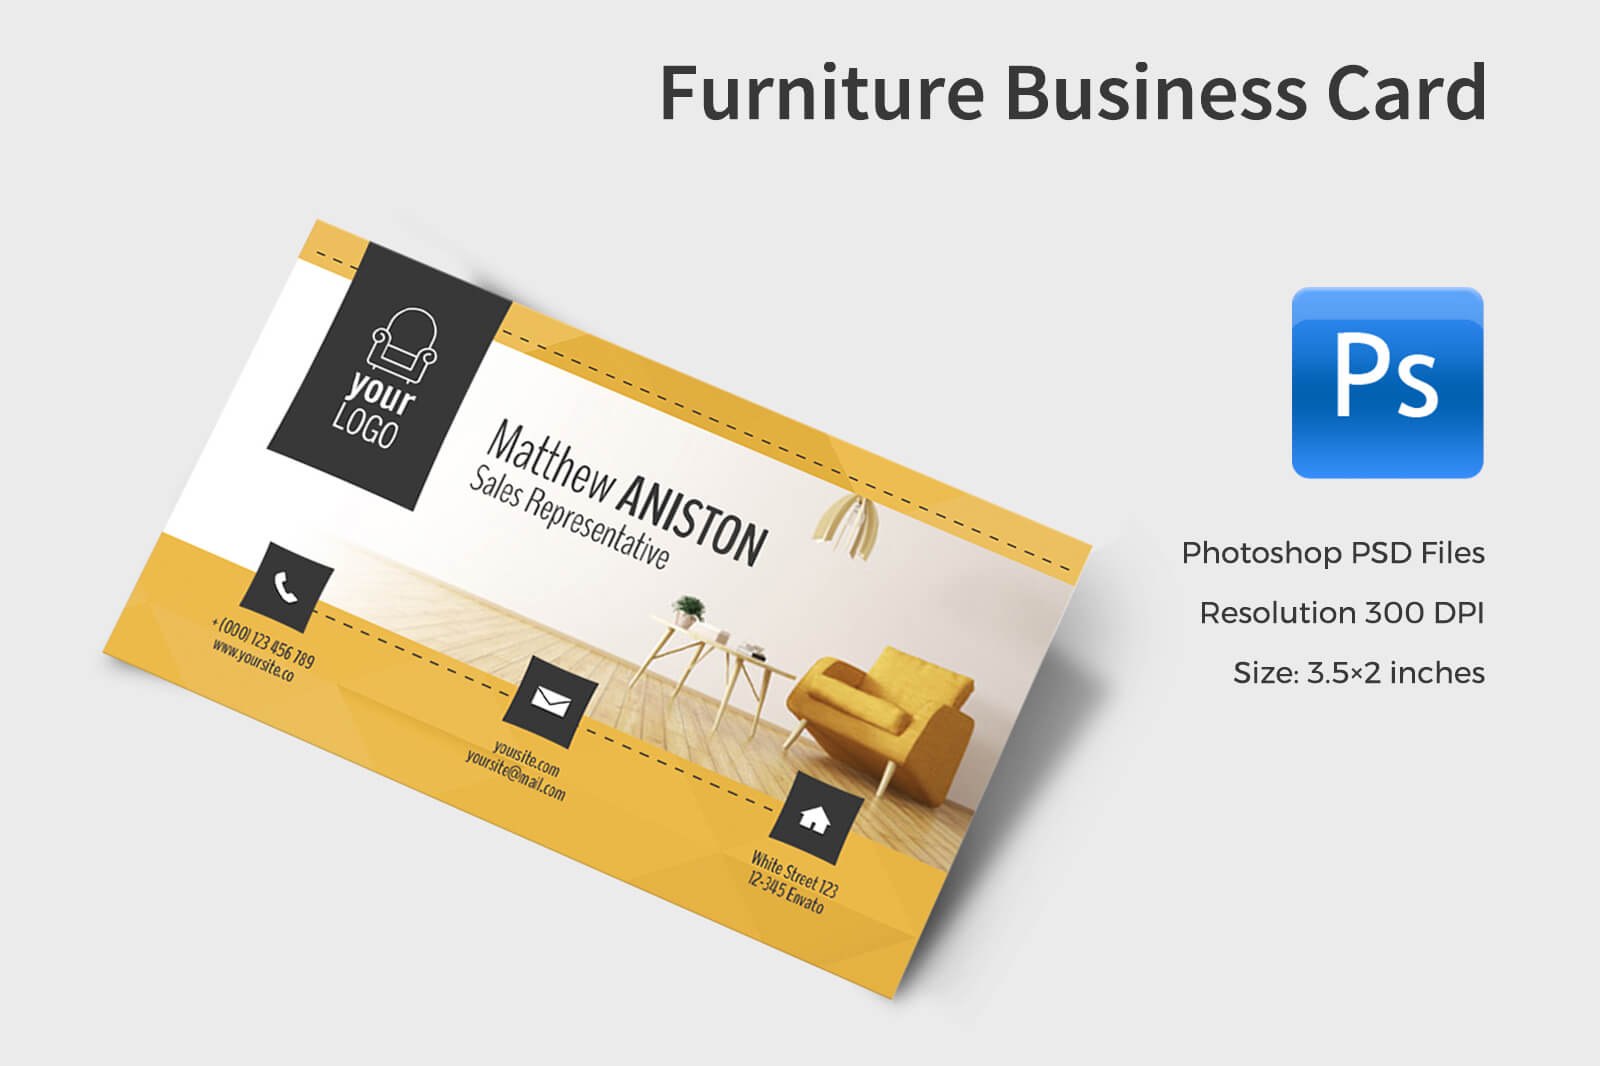 Furniture Business Card In Business Card Templates On Inside Business Card Template Size Photoshop